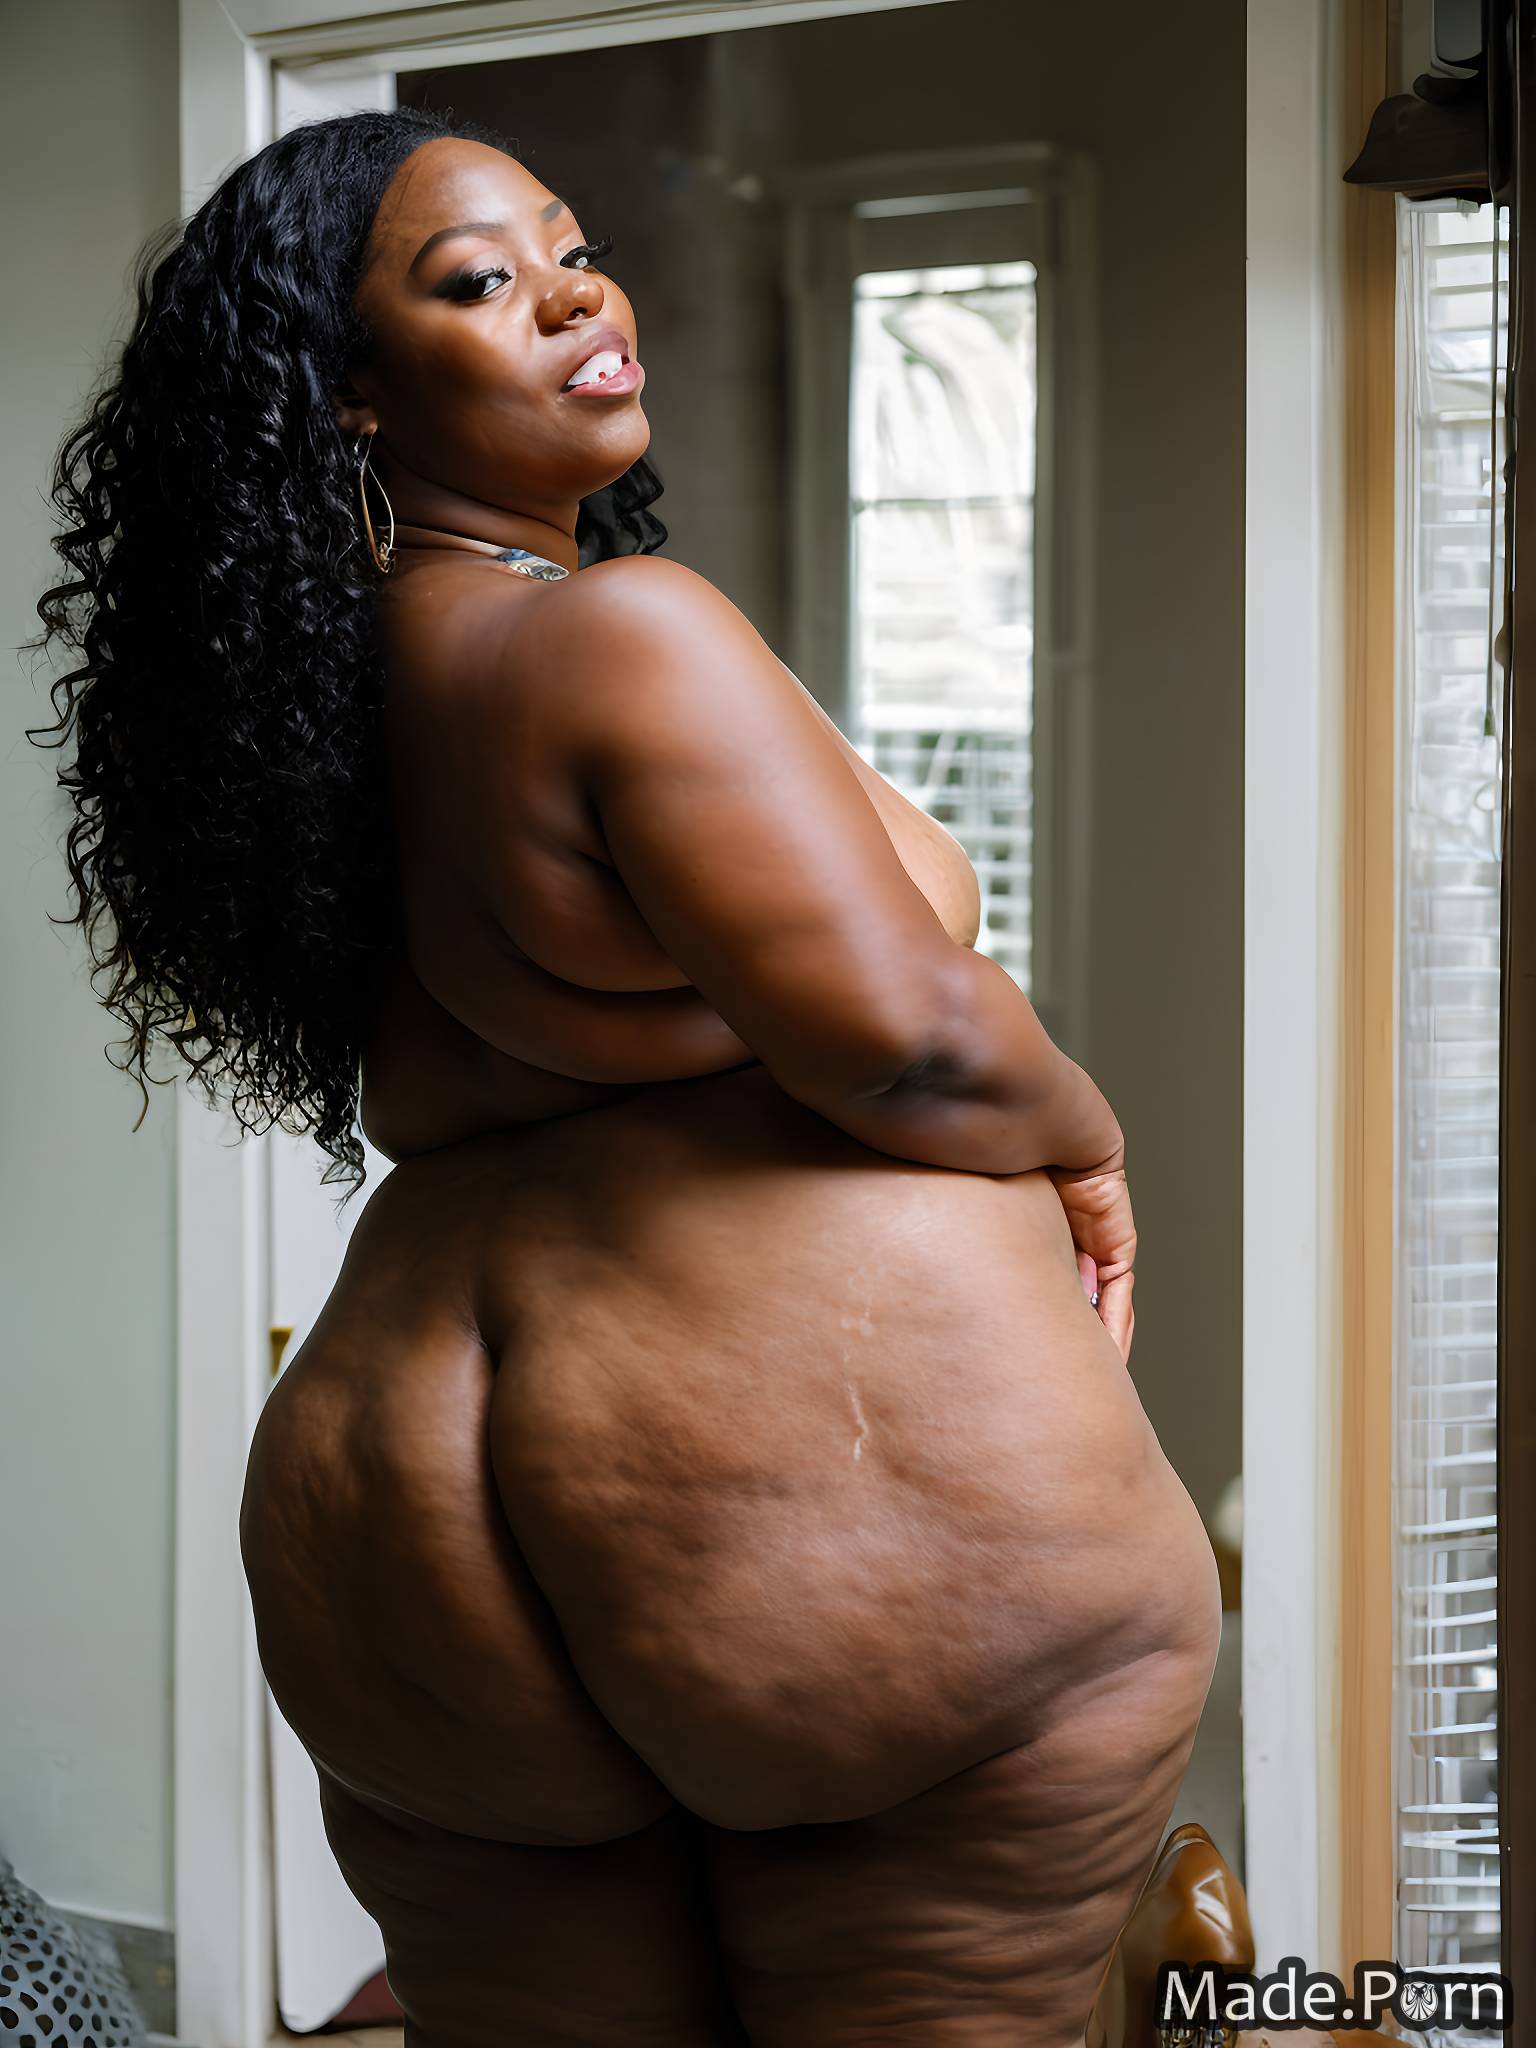 80 bimbo looking at viewer strip club seductive nigerian fat